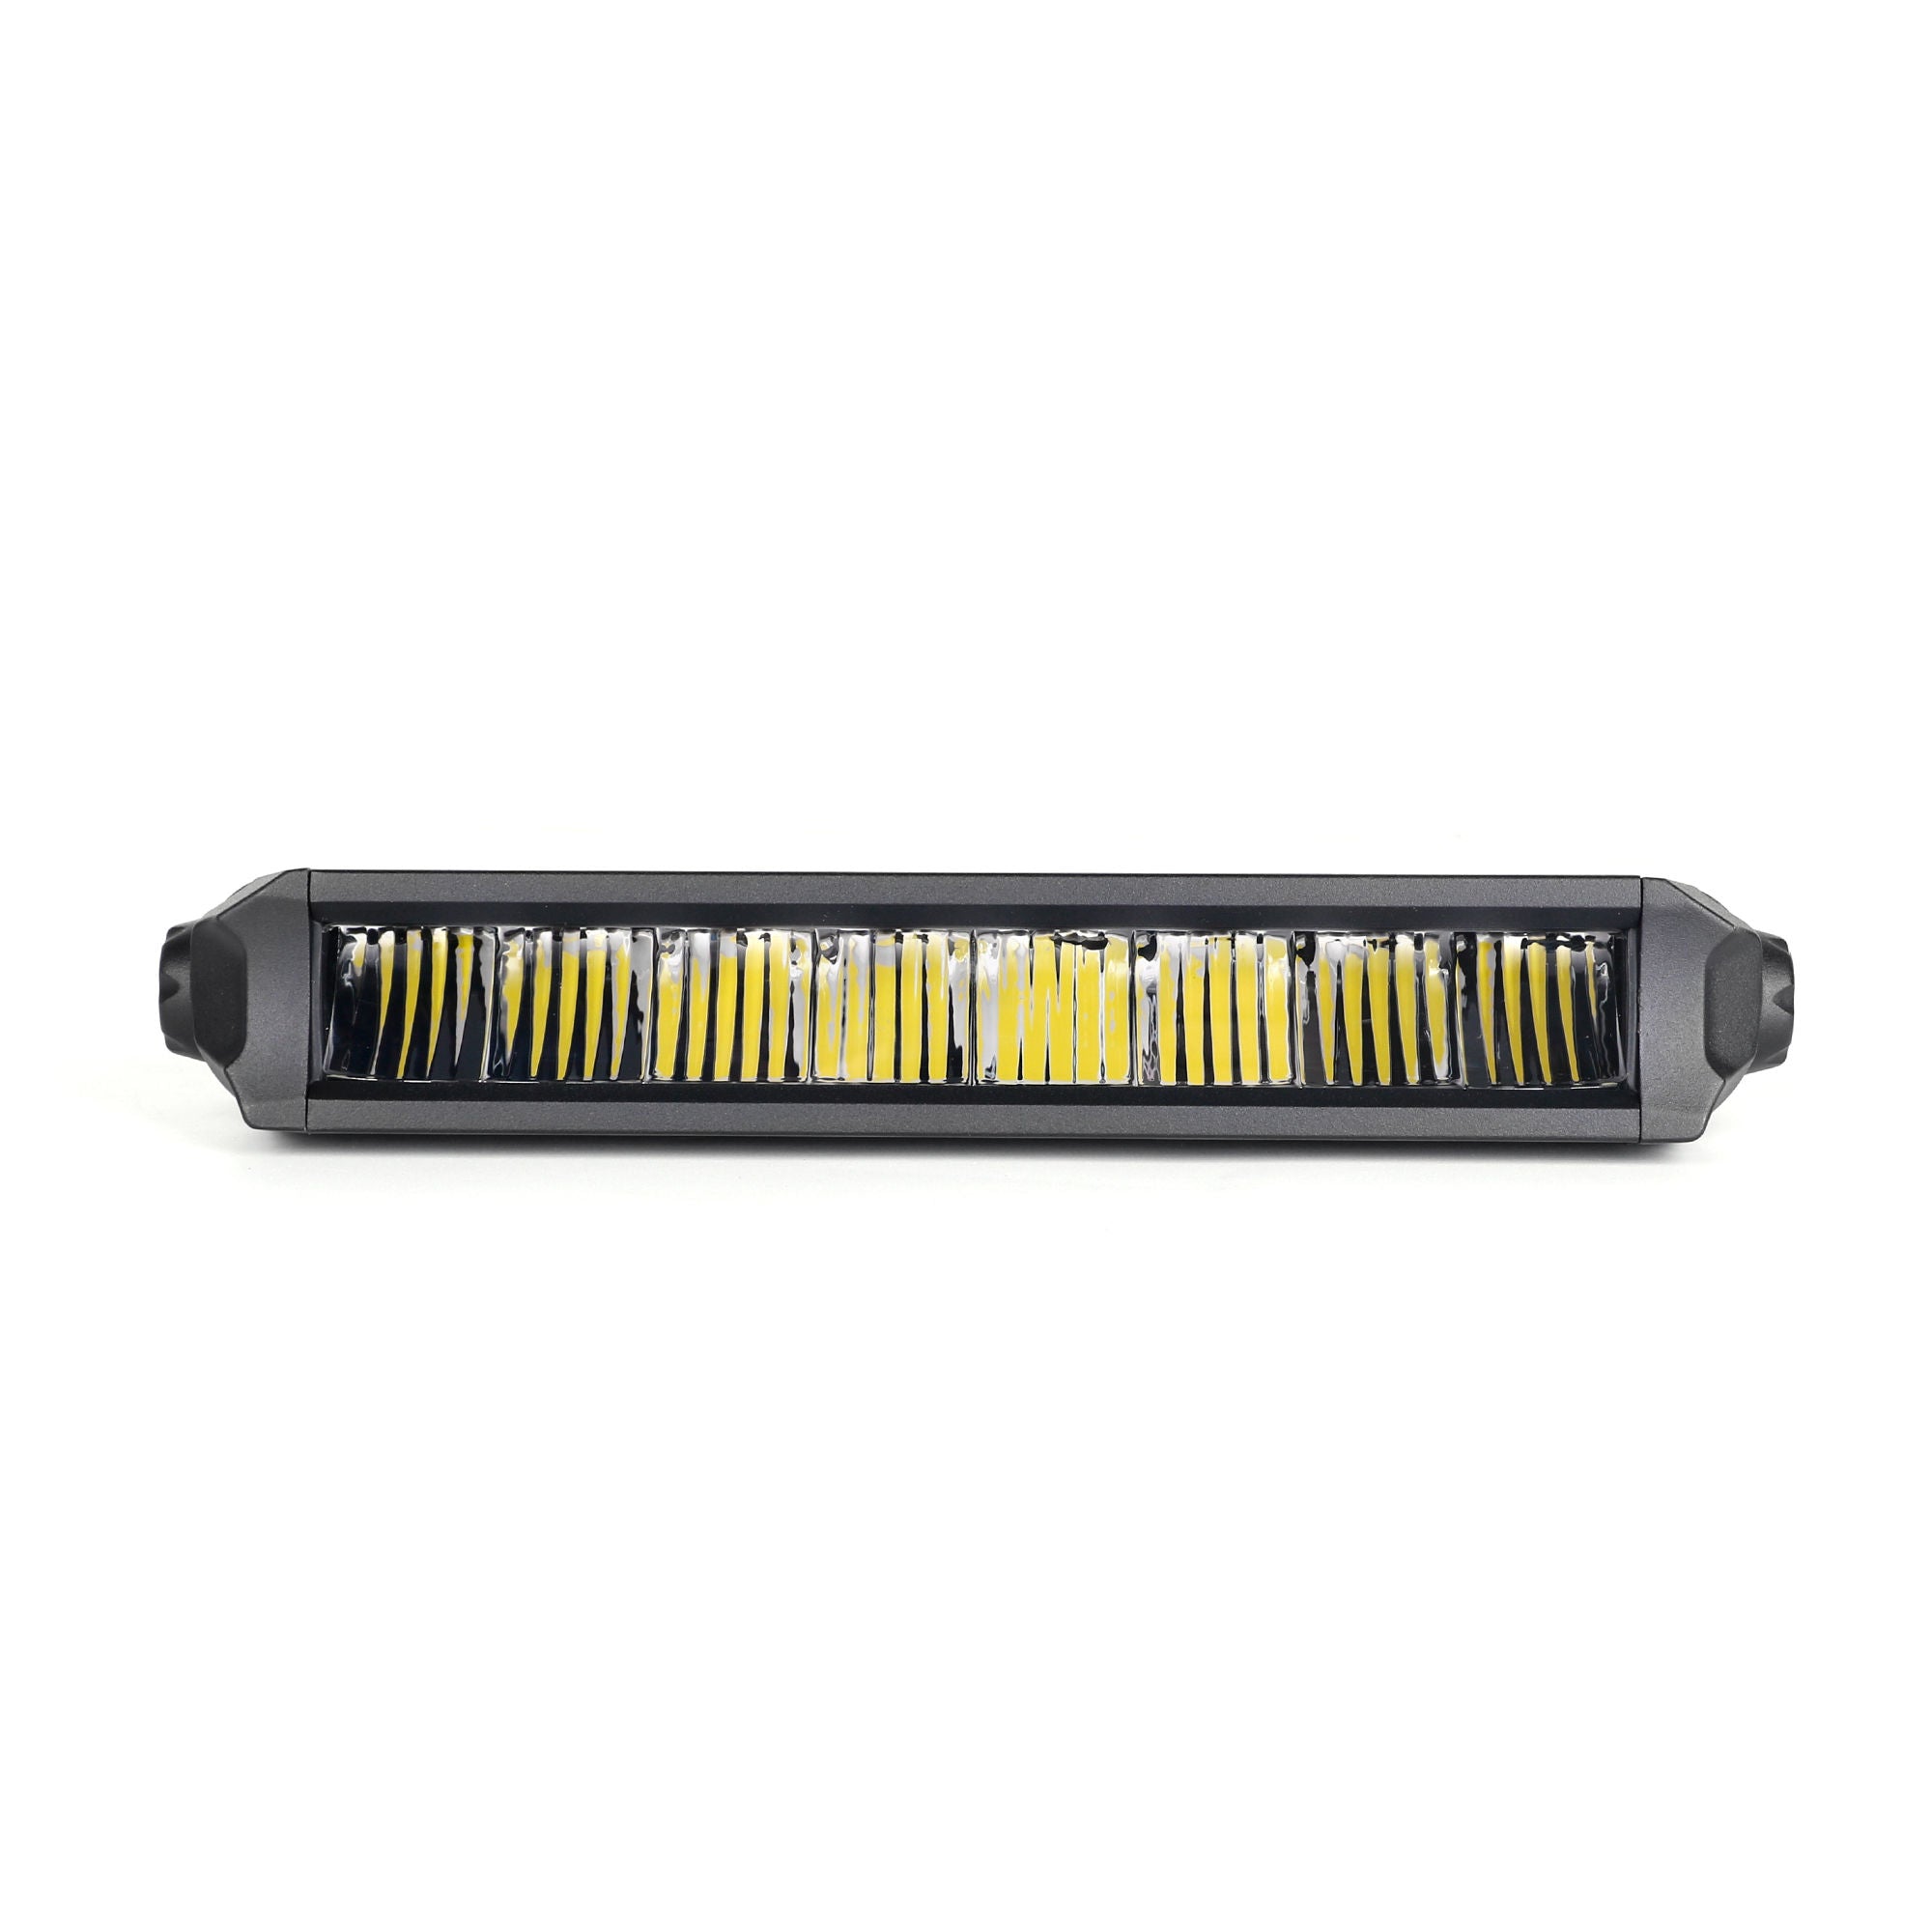 RTXOA41A610 - Street Legal Multi-Function Single Row Light Bar, 5W Led, Auxiliary Fog Light, 10", 1430Lm